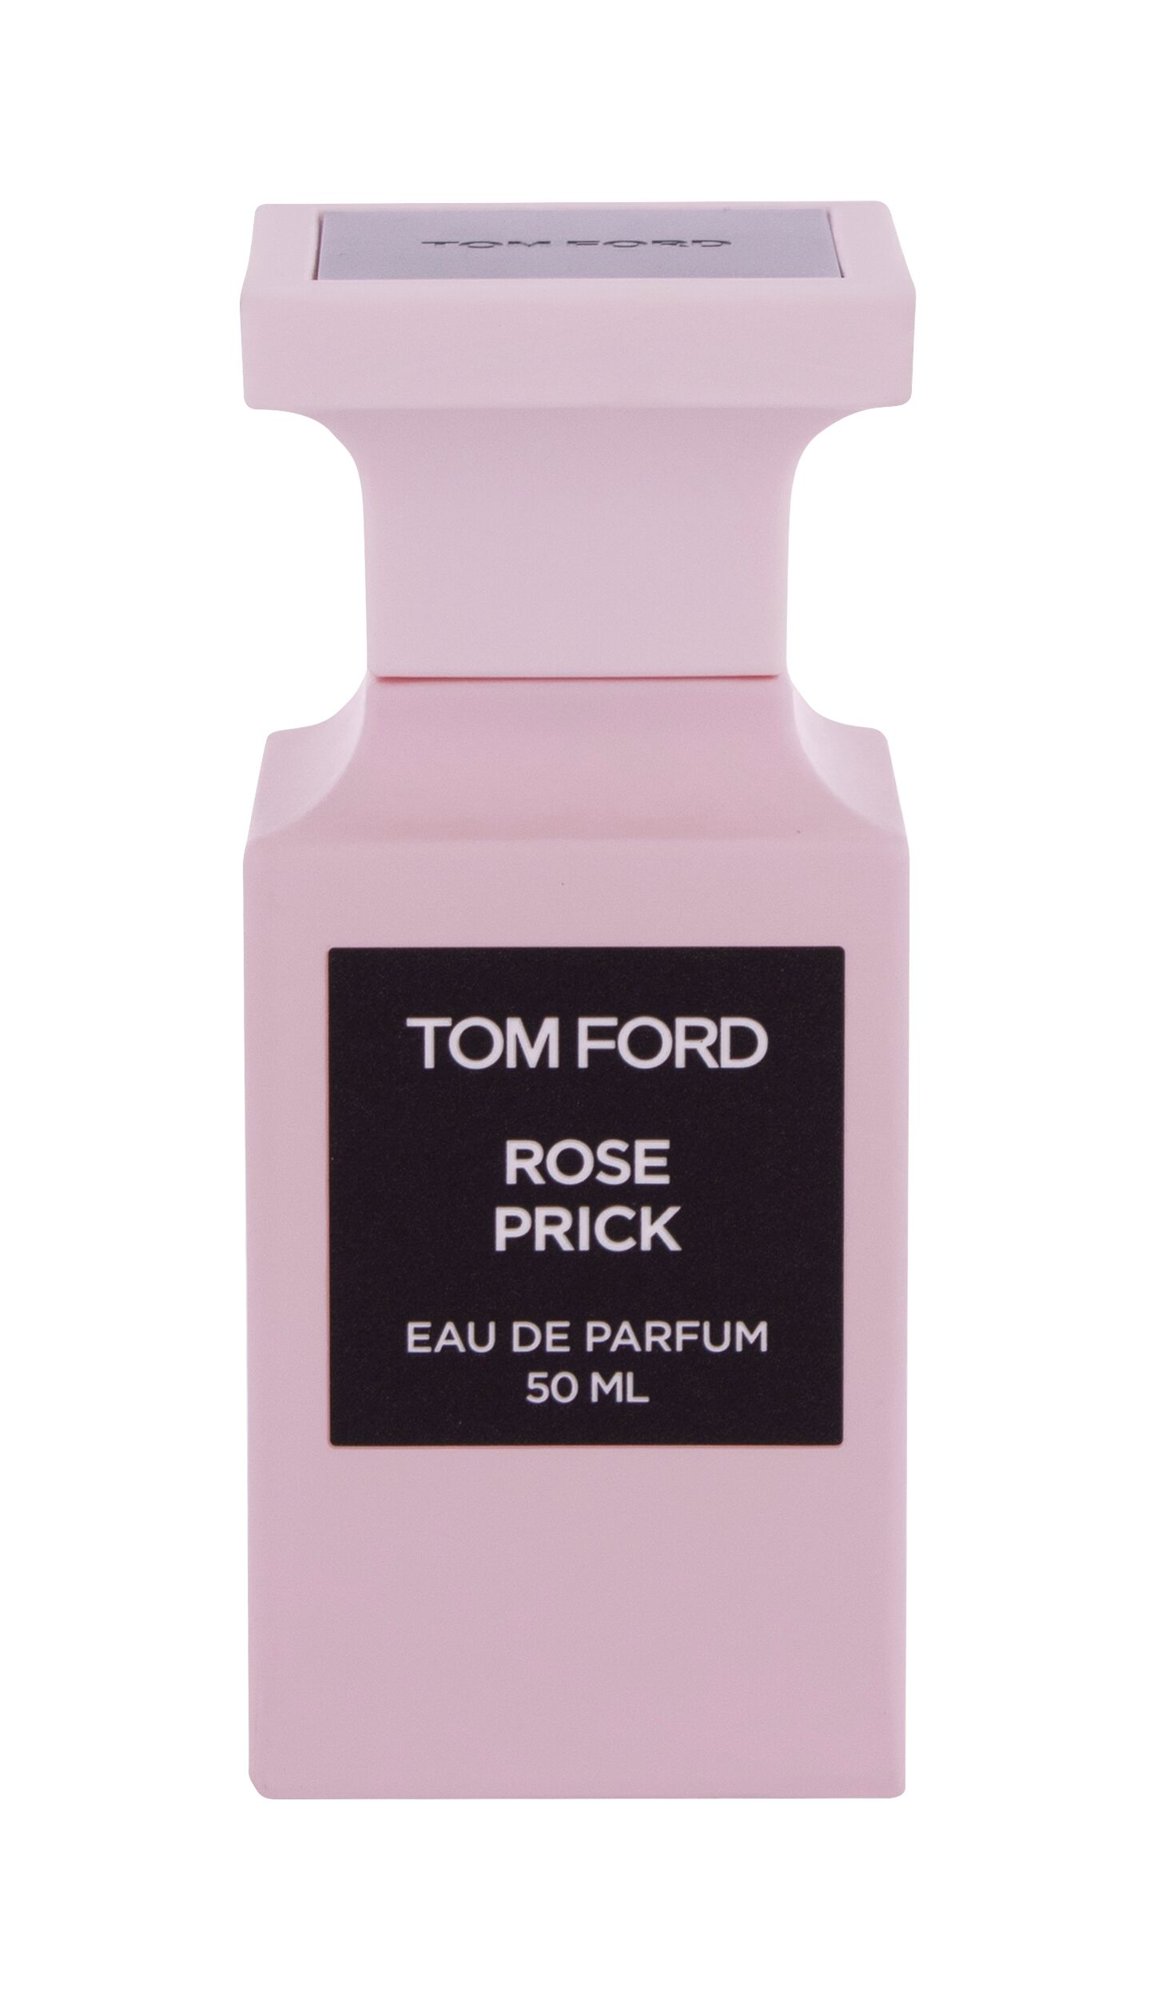 Tom Ford Rose Prick, edp 50ml - Teszter